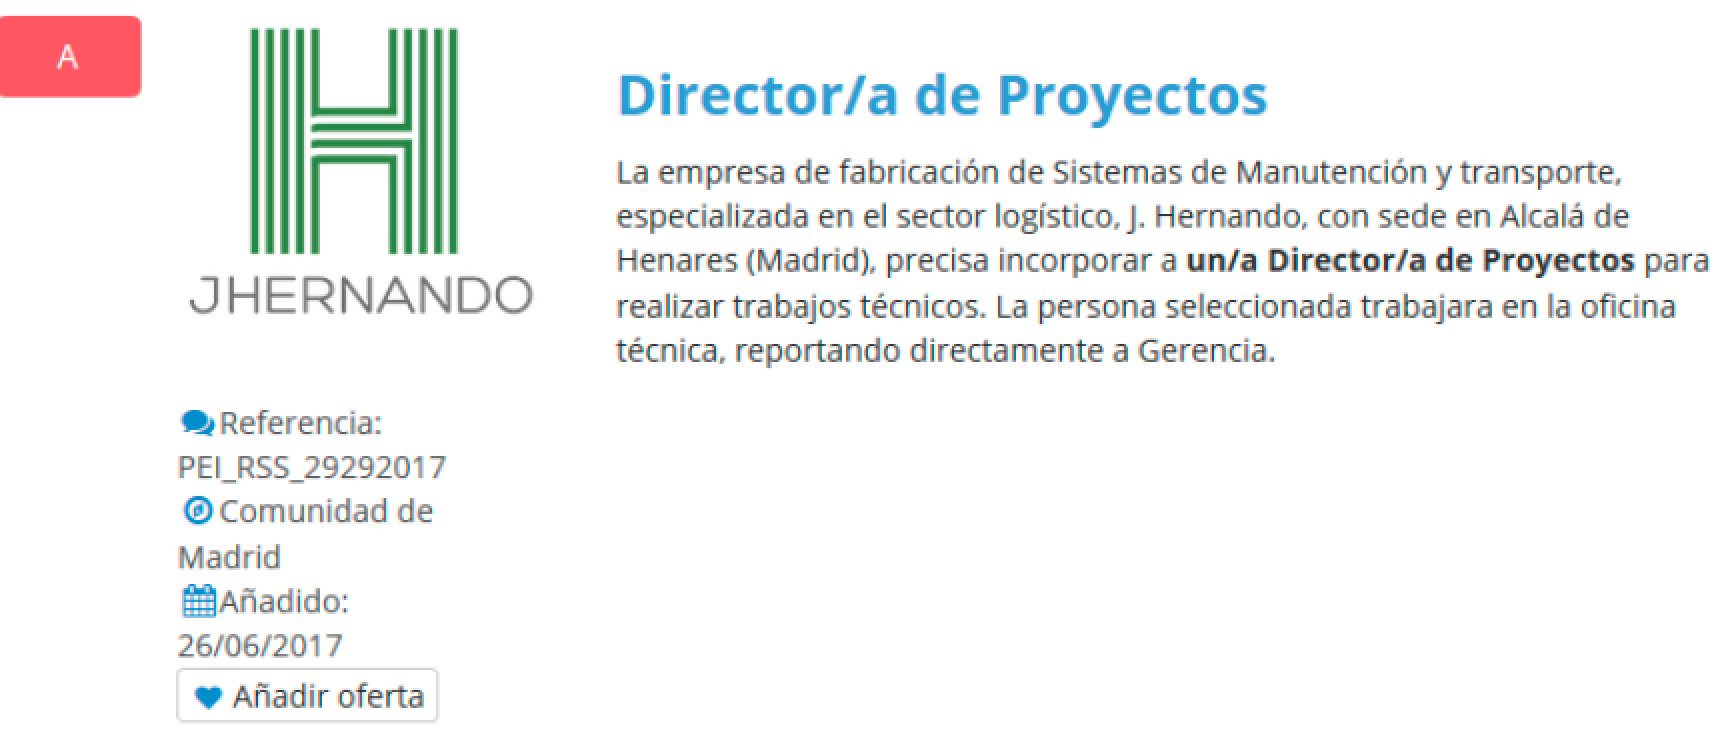 #empleo @proempleoing  Director/a de Proyectos - Madrid https://t.co/70KoGtsSaW https://t.co/uZBRgG8SZa